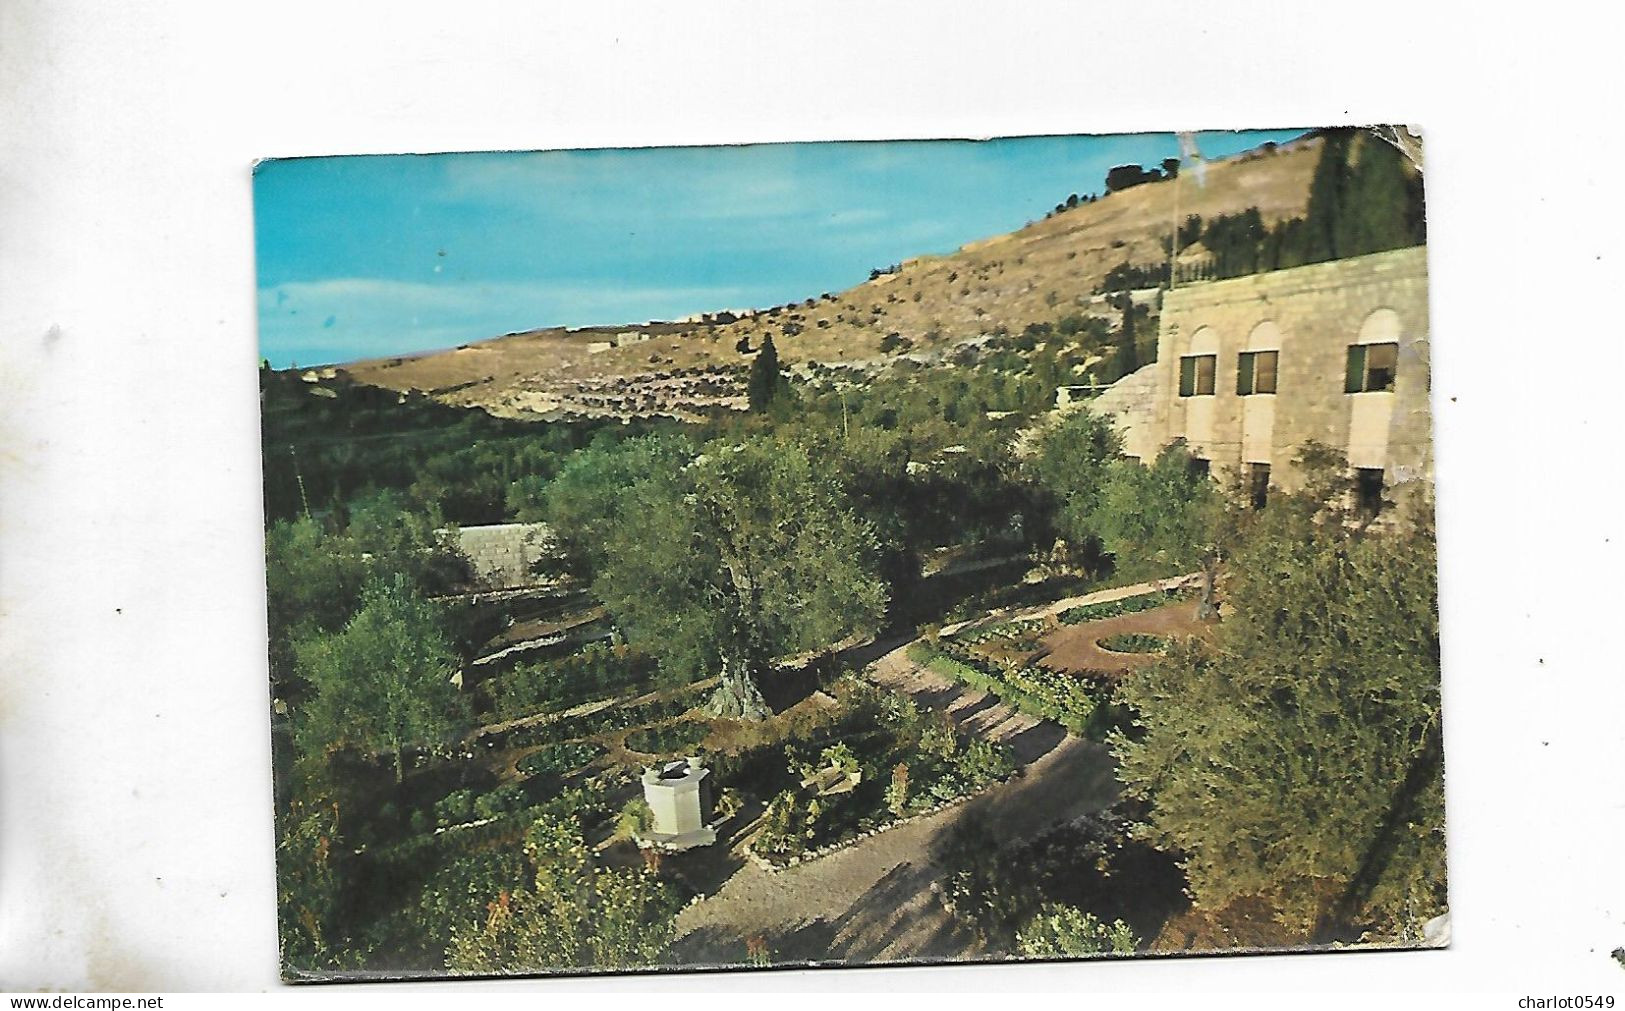 Garden Of Gethsemani Jerusalem - Jordan